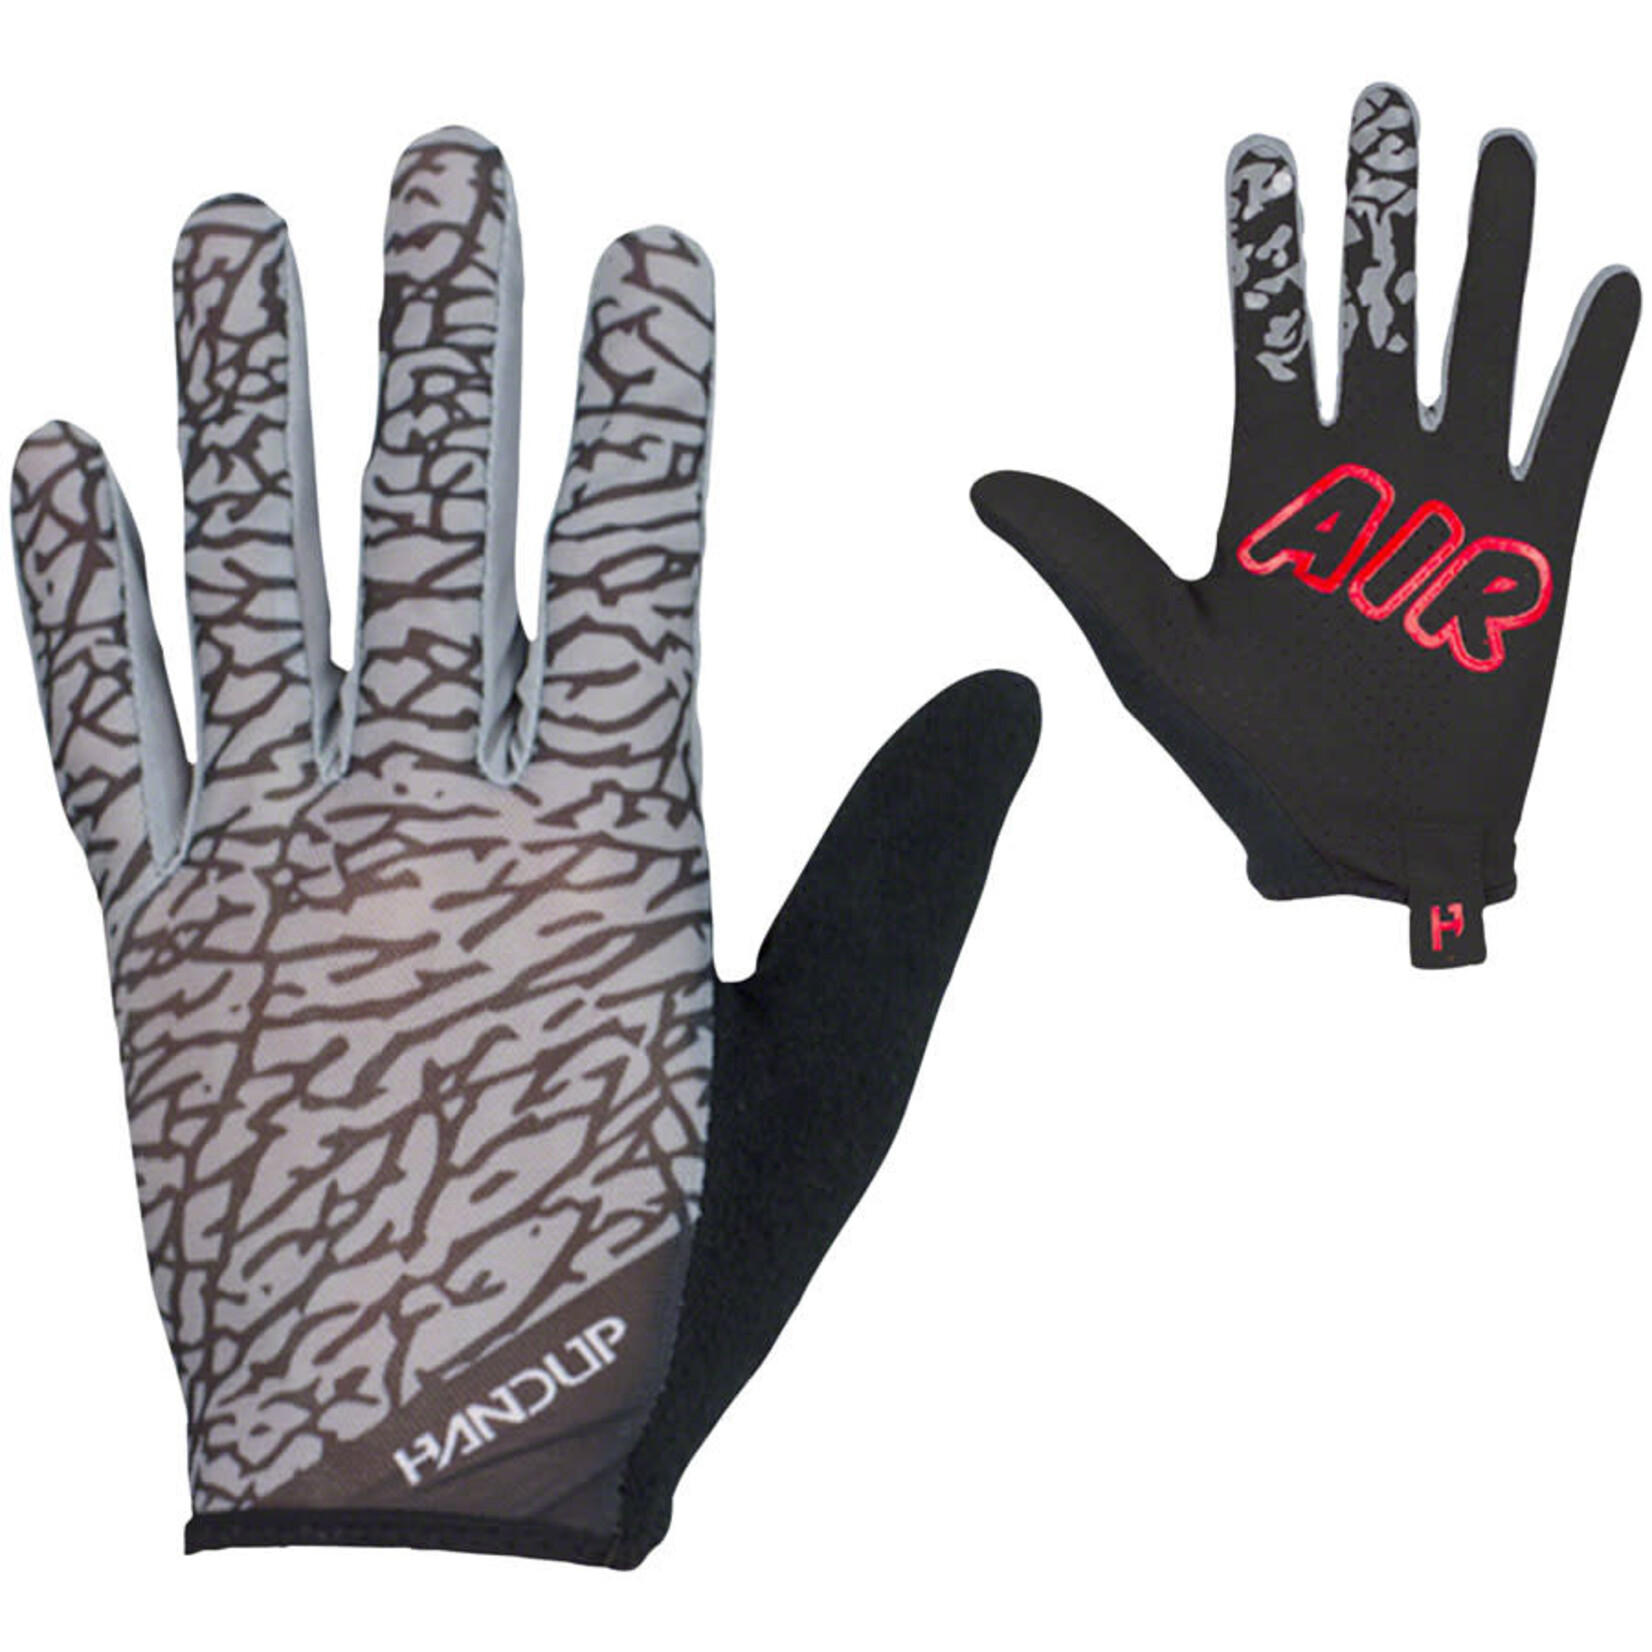 Handup Handup Summer Lite Glove - Big Air Summer, Full Finger, Large